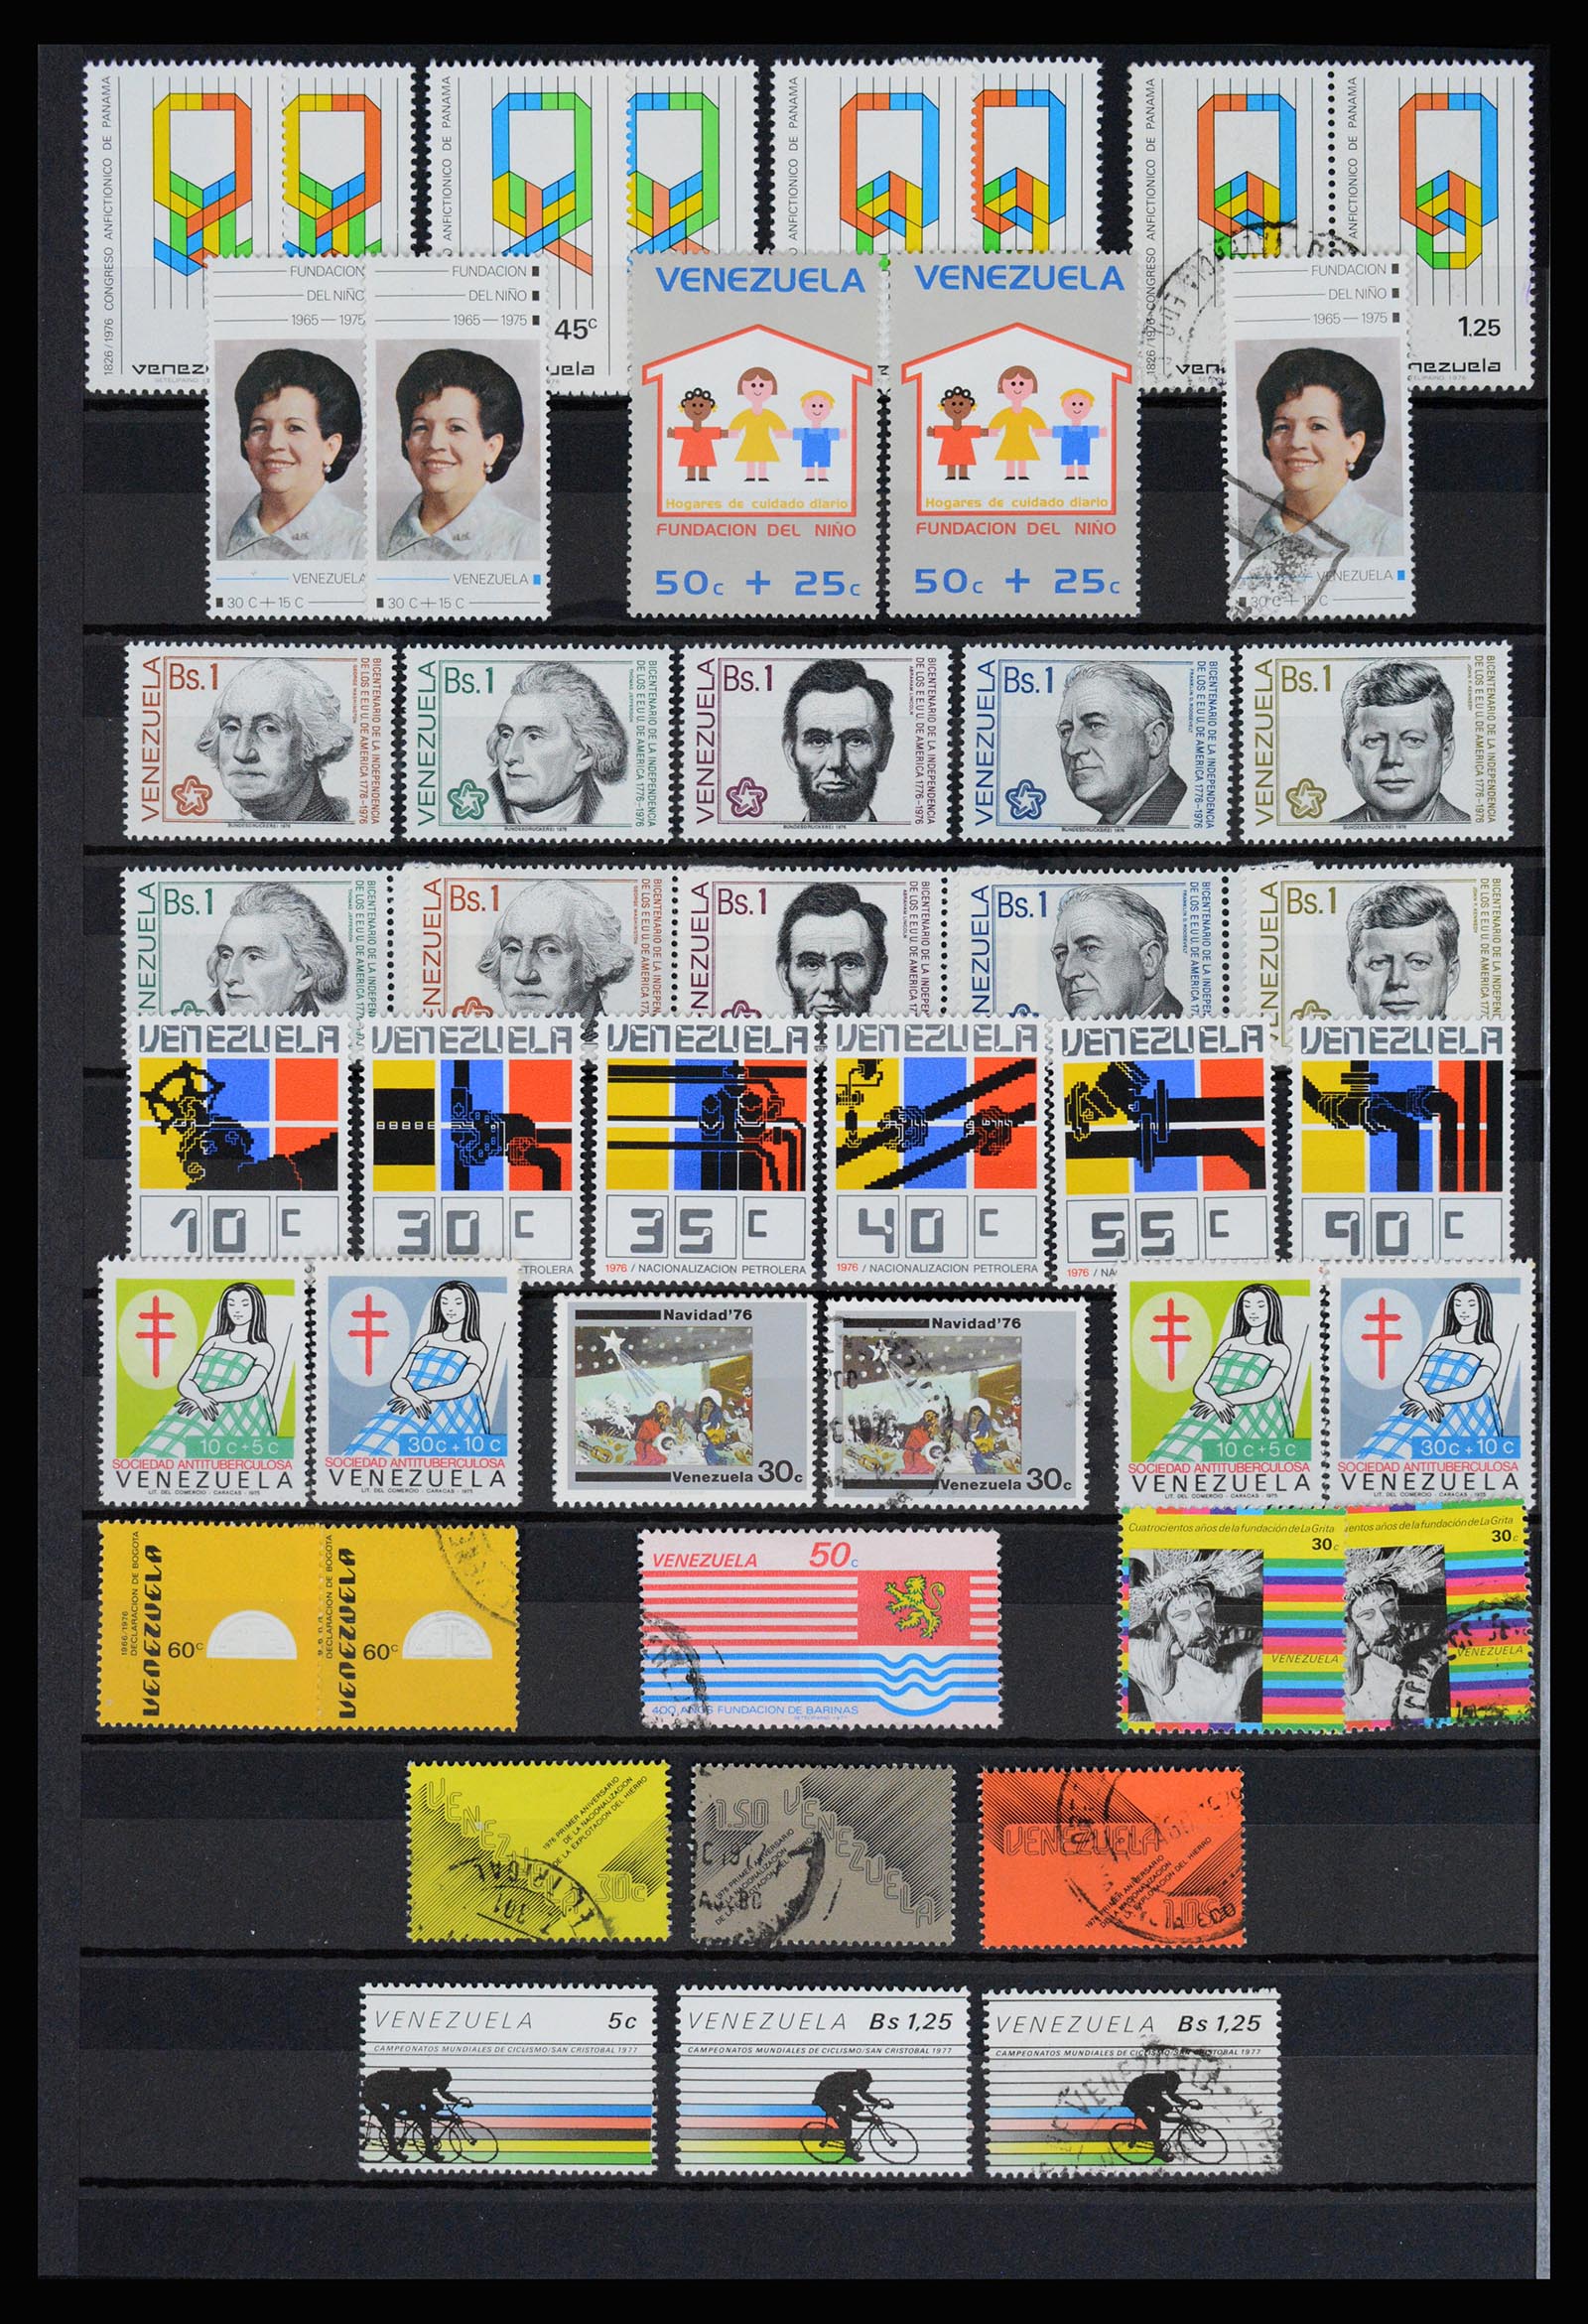 36987 073 - Stamp collection 36987 Venezuela 1860-1995.